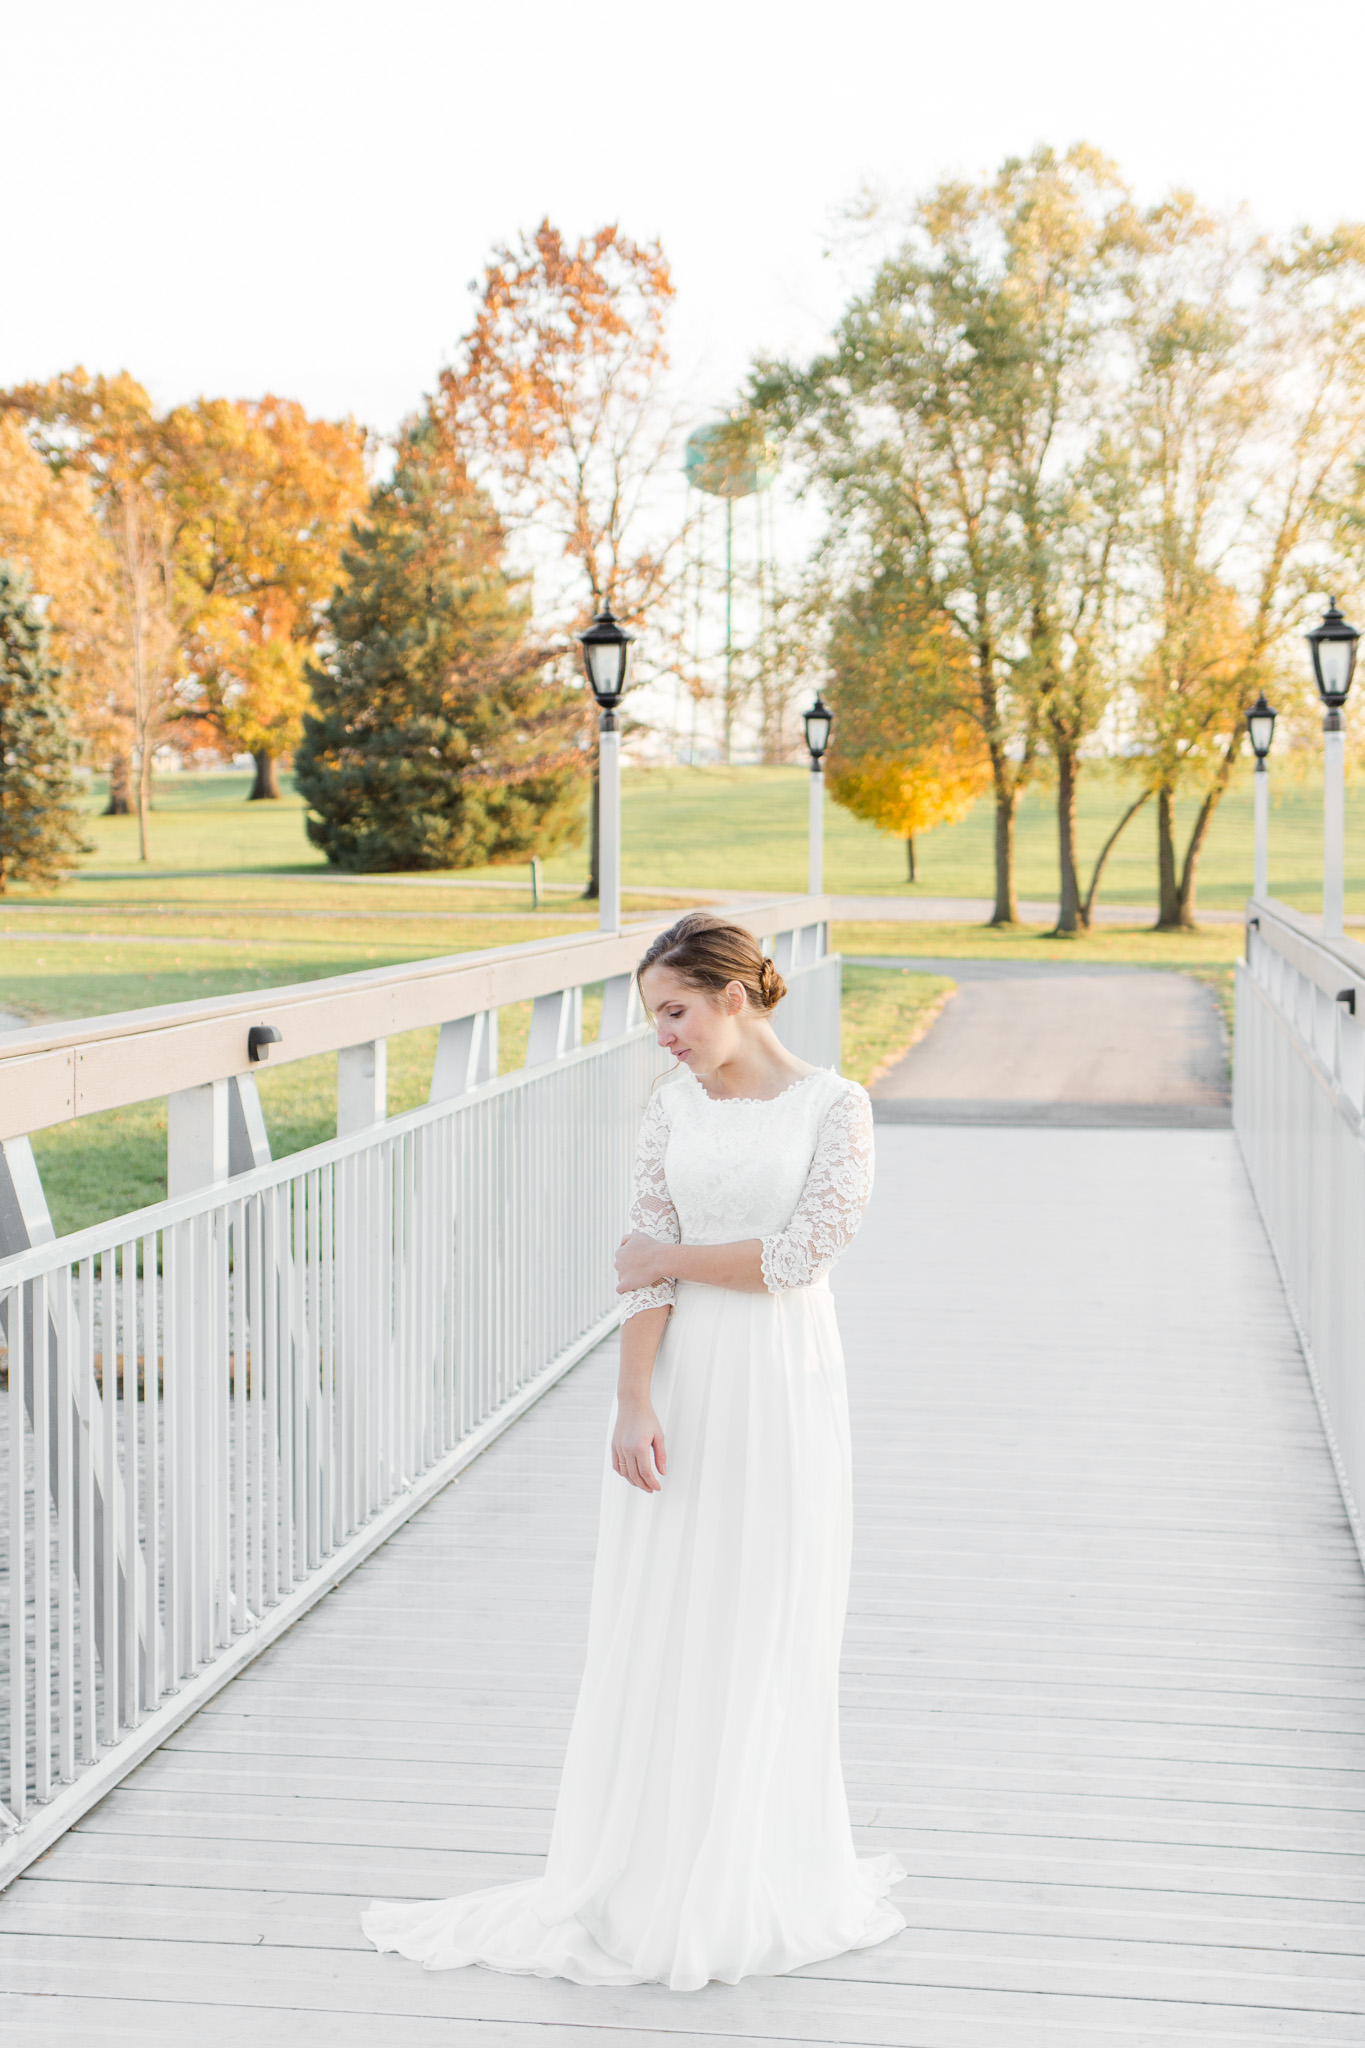 Modest lace wedding dress - Karen Elise Photography